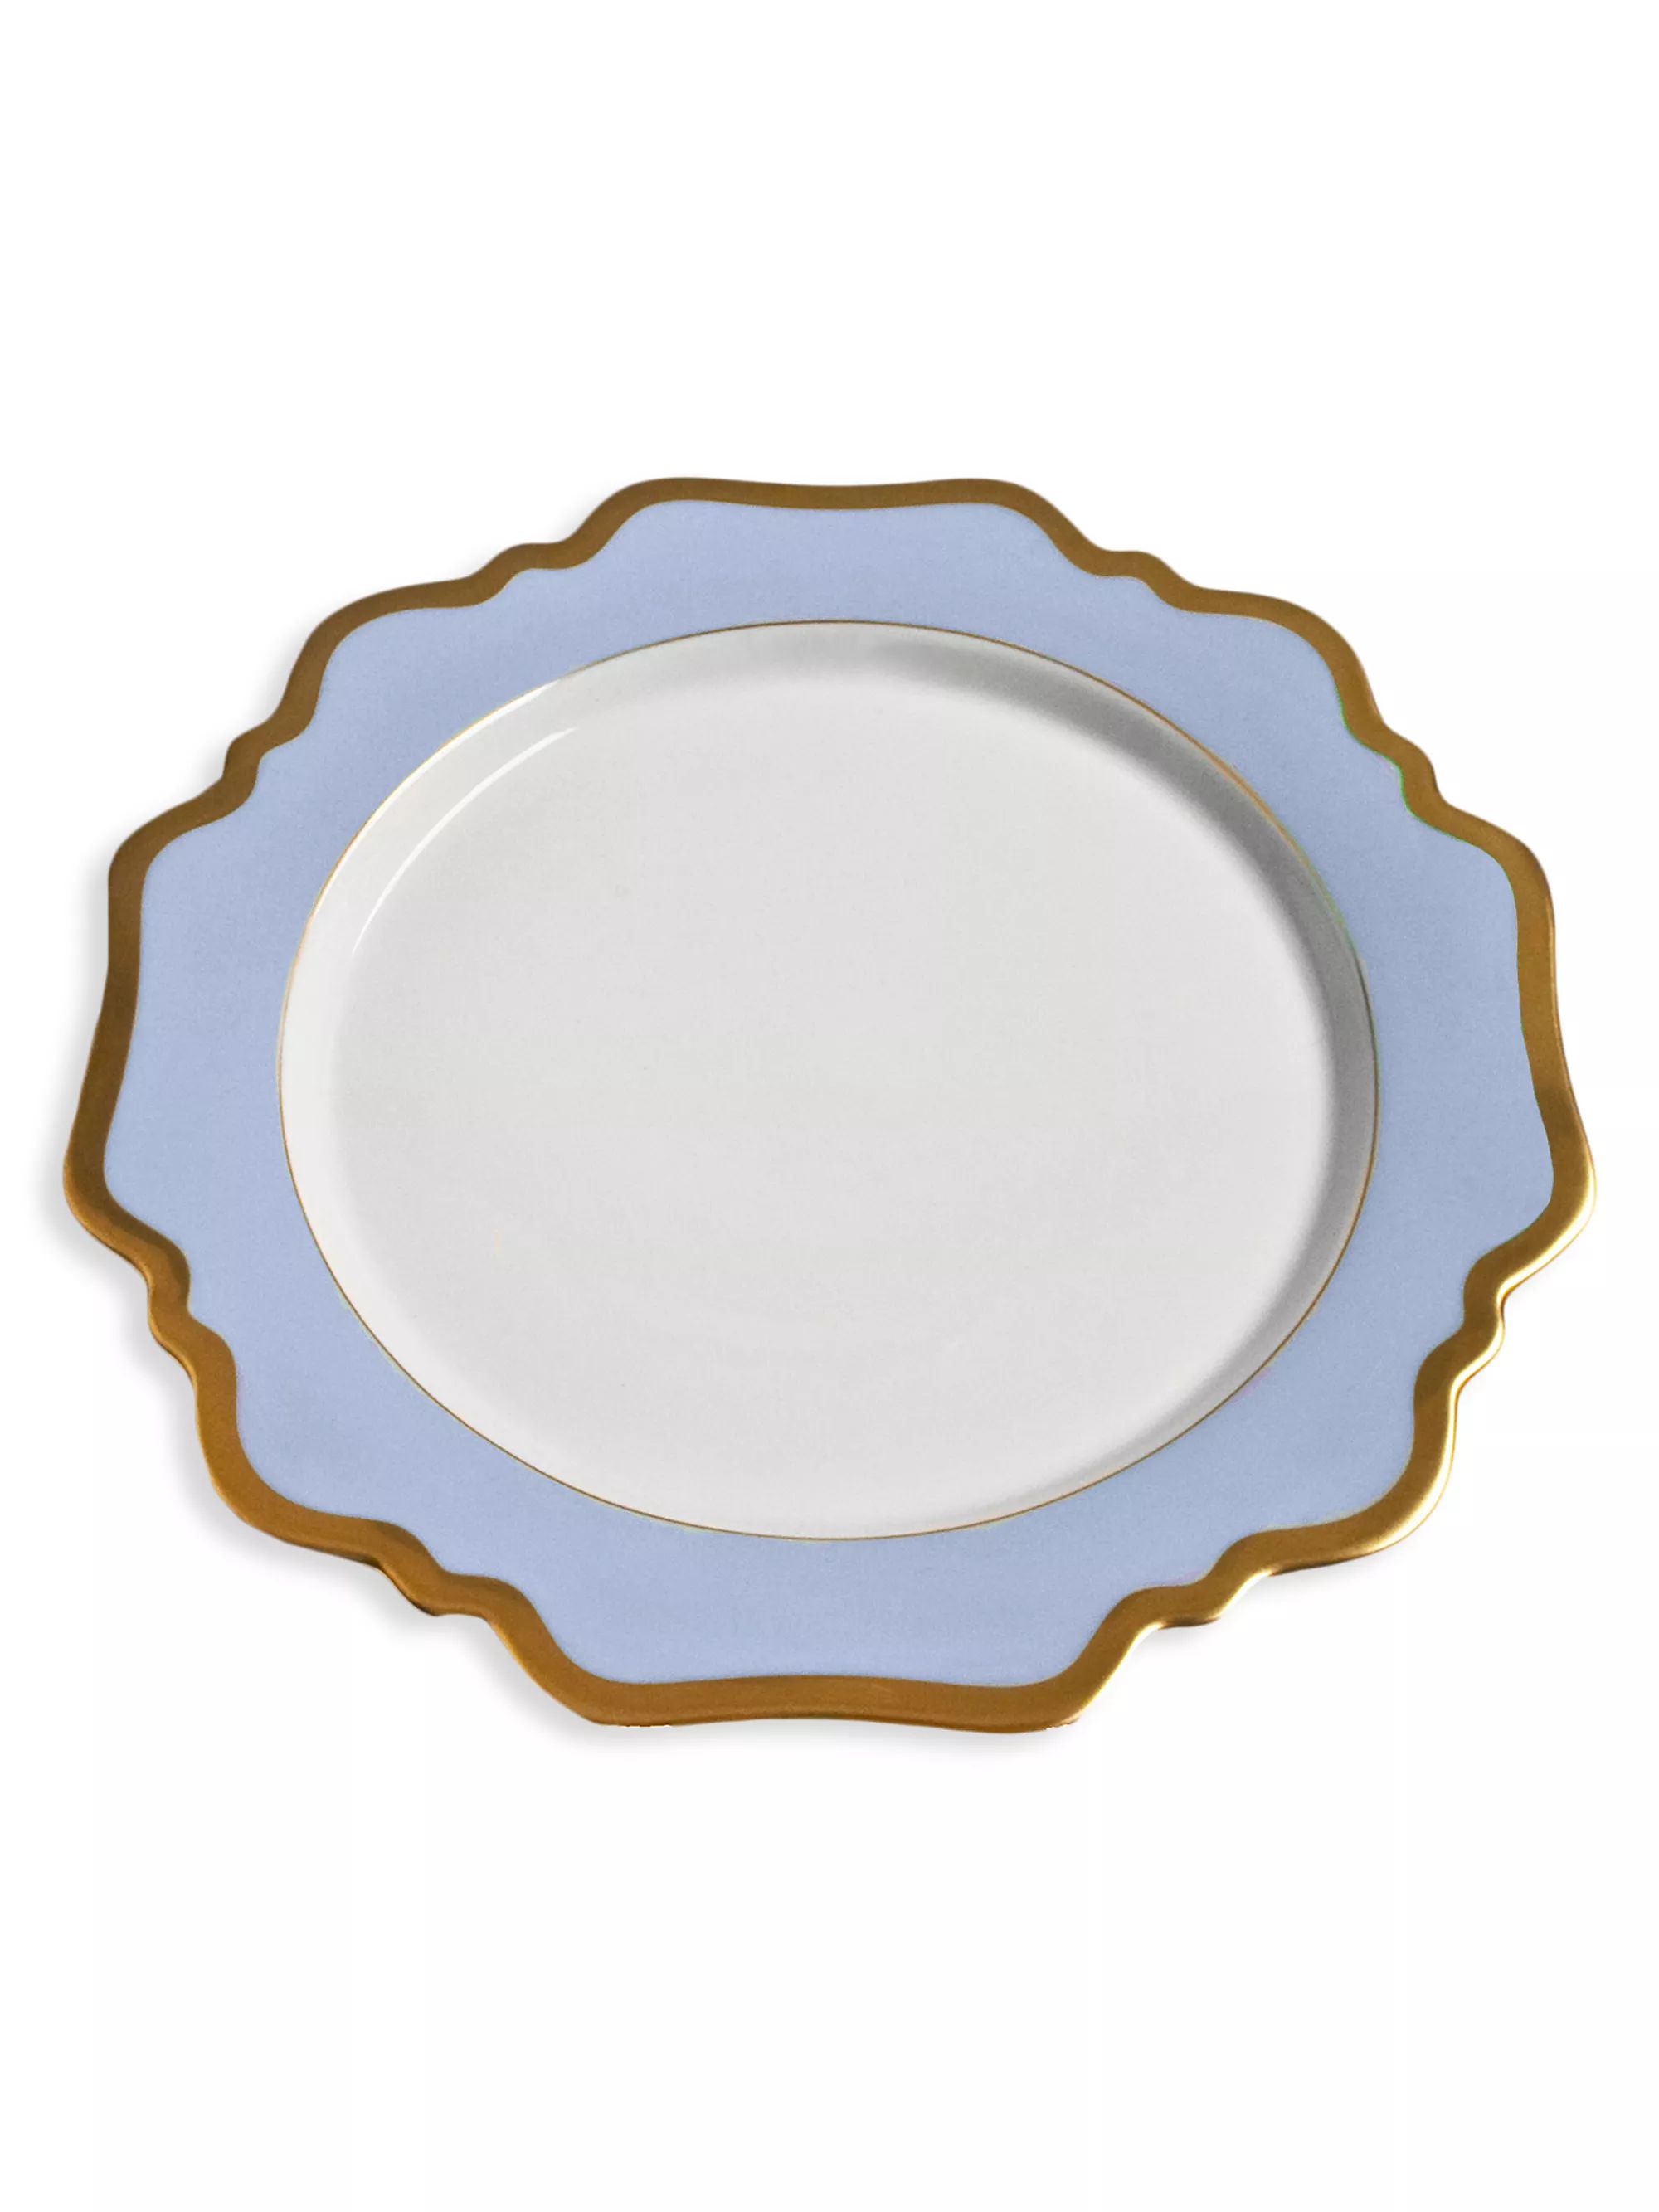 Anna's Palette Dinner Plate | Saks Fifth Avenue